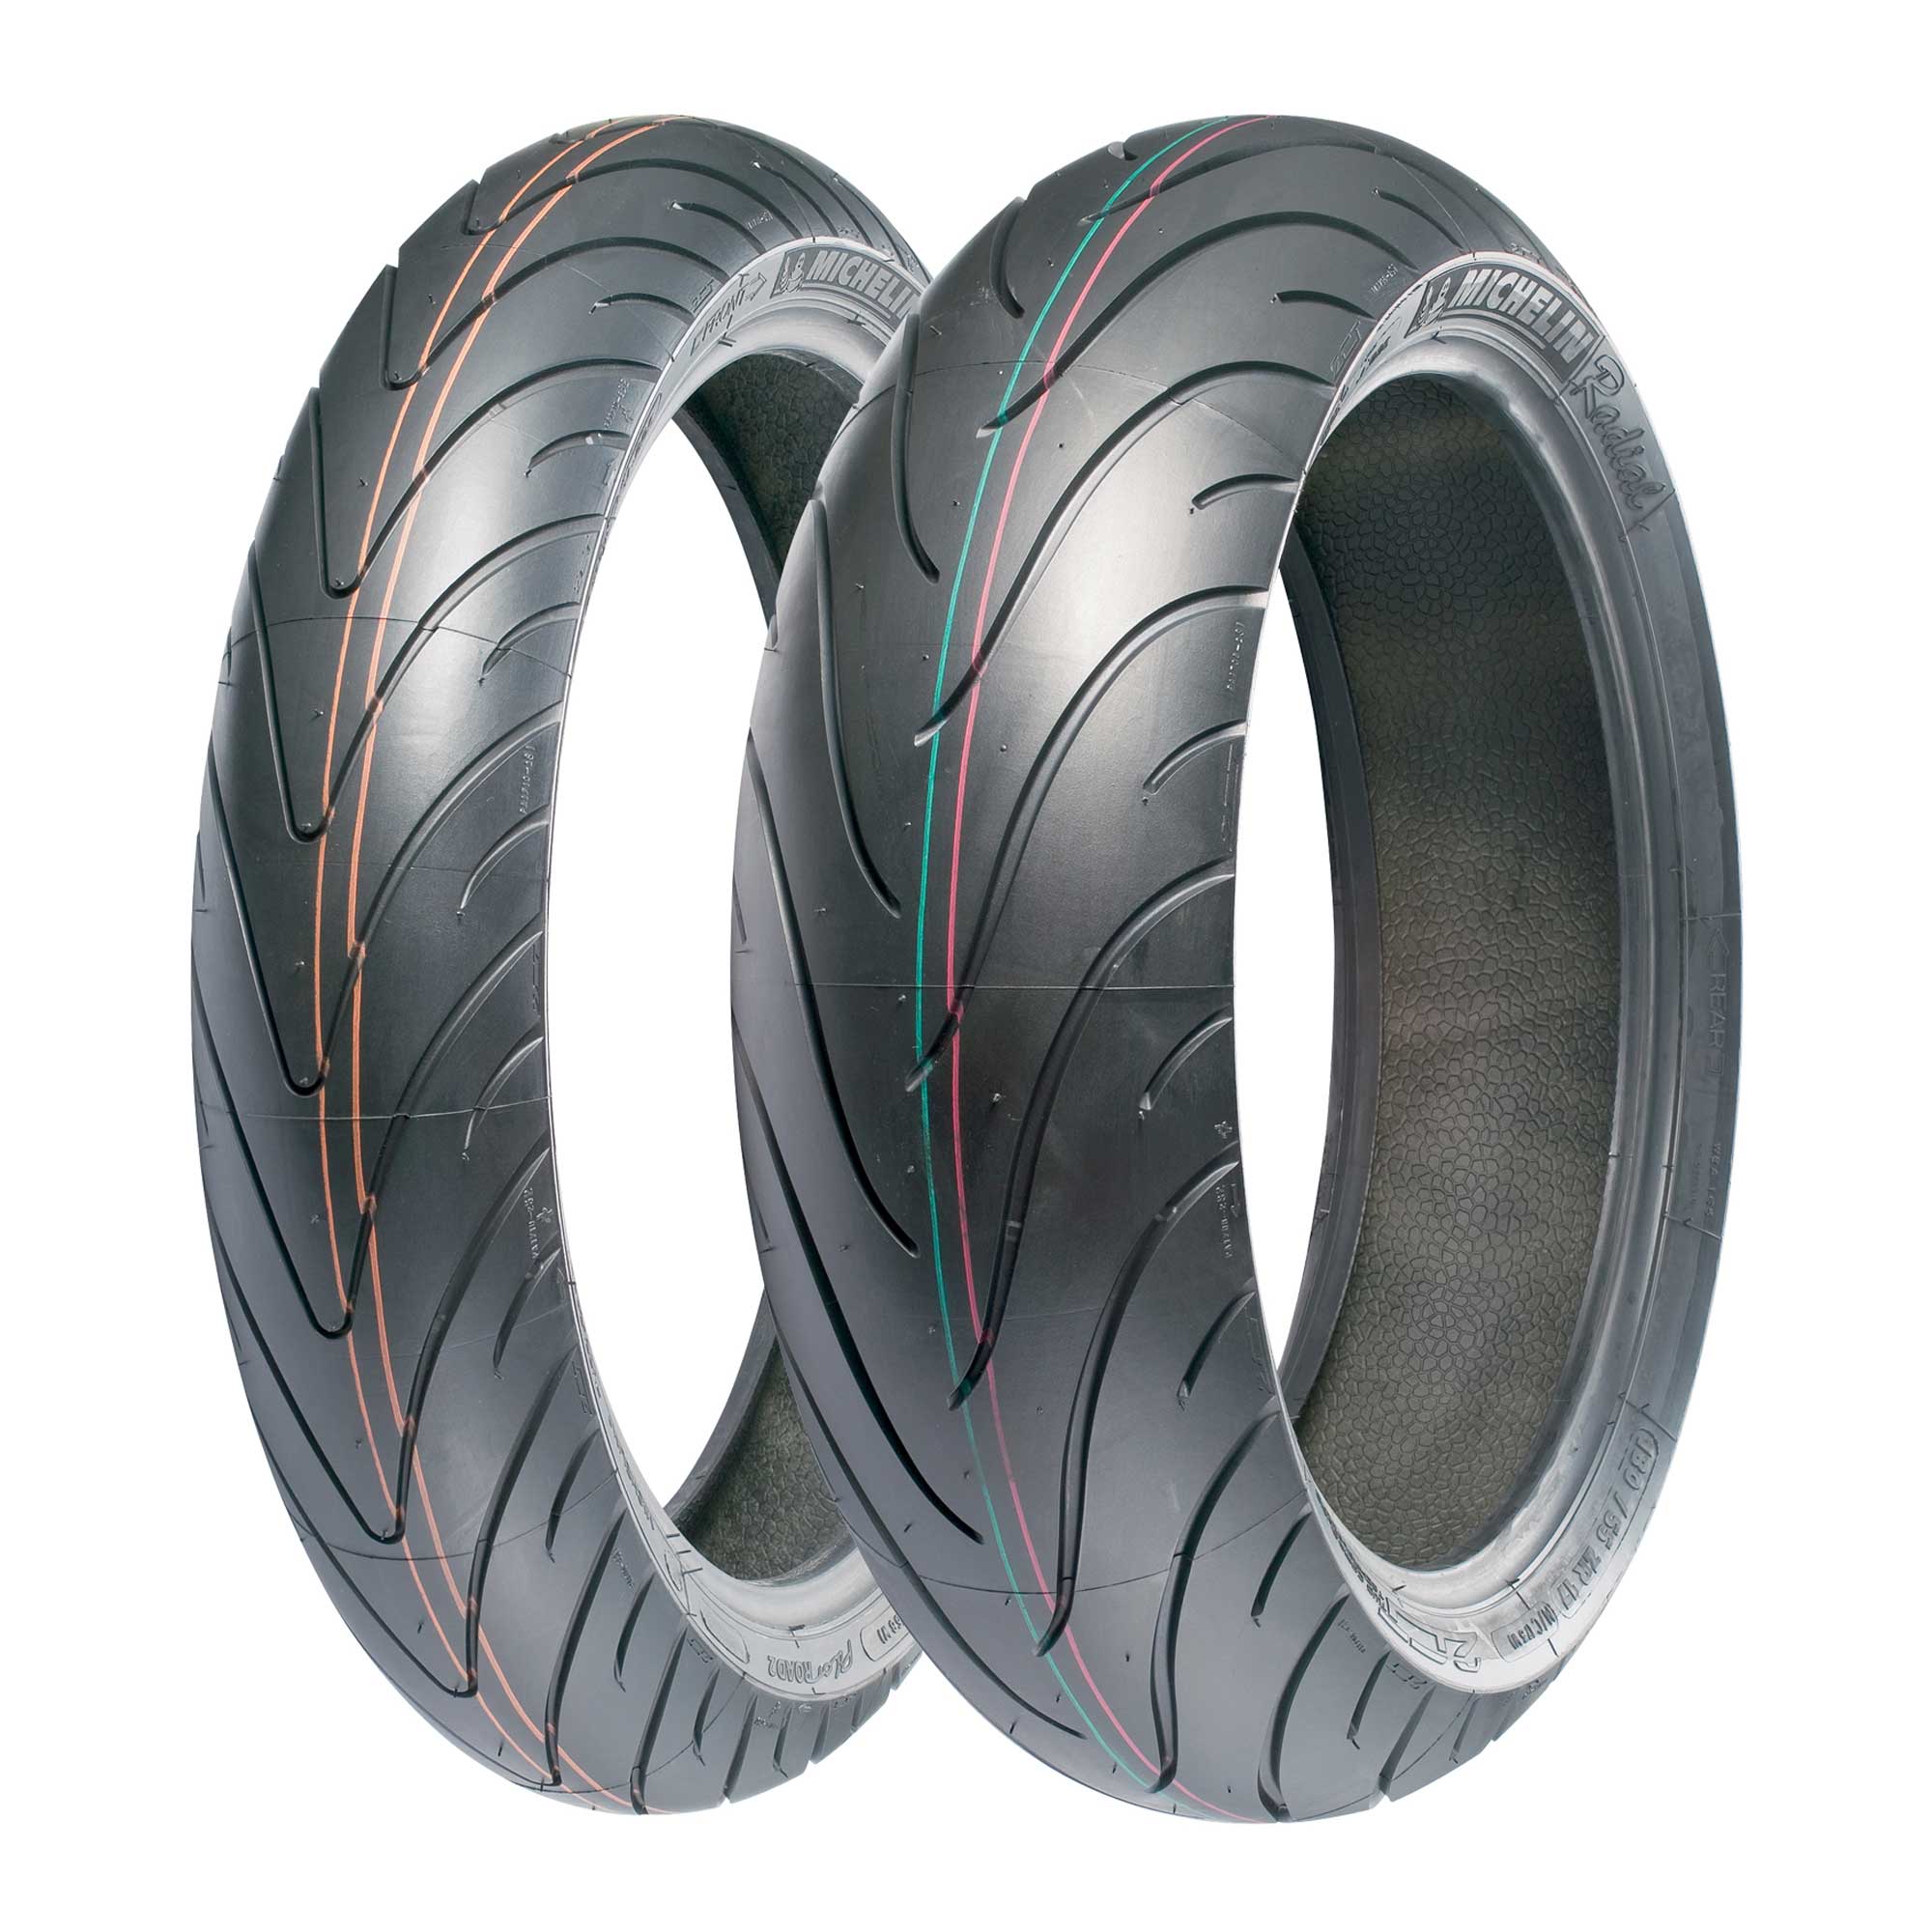 Michelin Pilot Road 2 Sport Touring Motorcycle / Bike Tyre | eBay